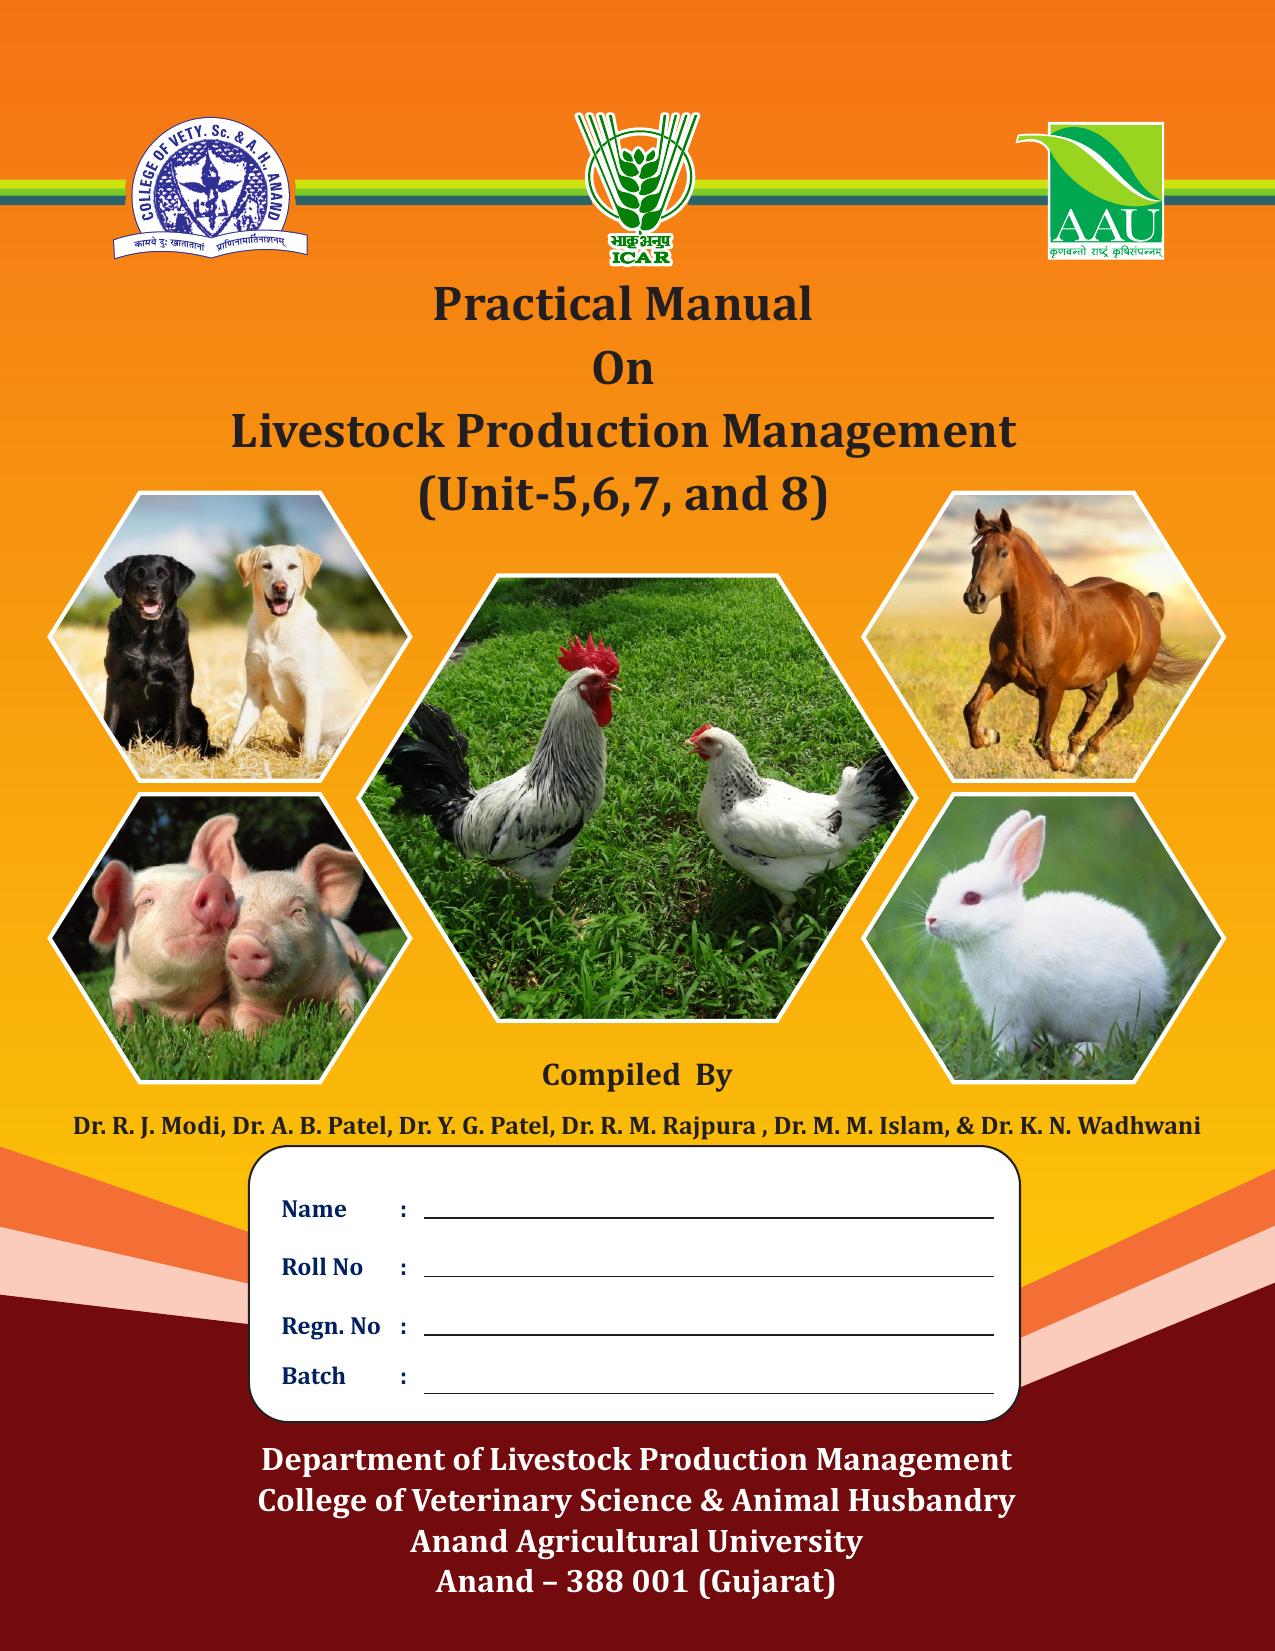 Practical Manual On Livestock Production Management 2015